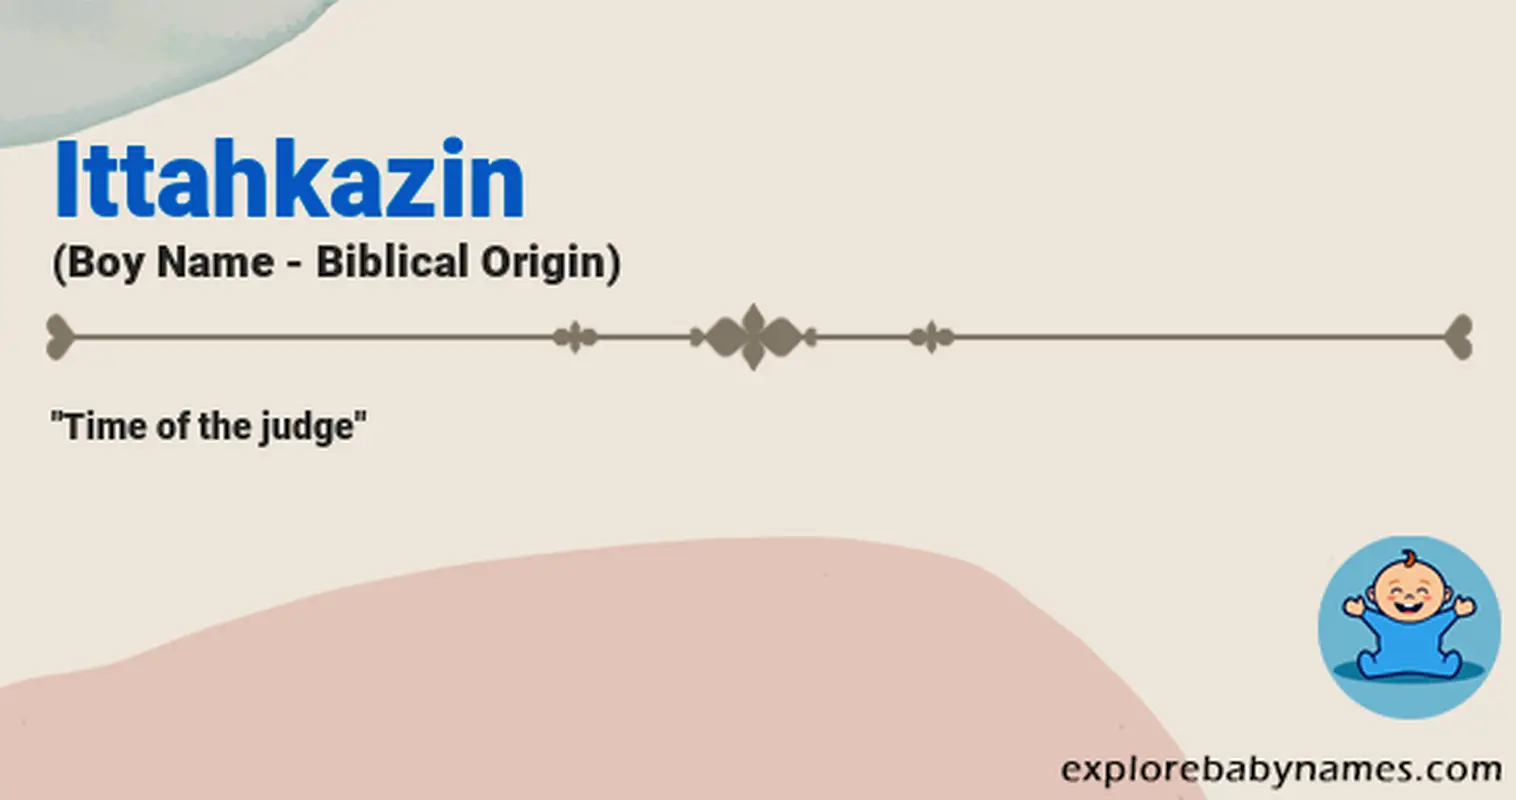 Meaning of Ittahkazin